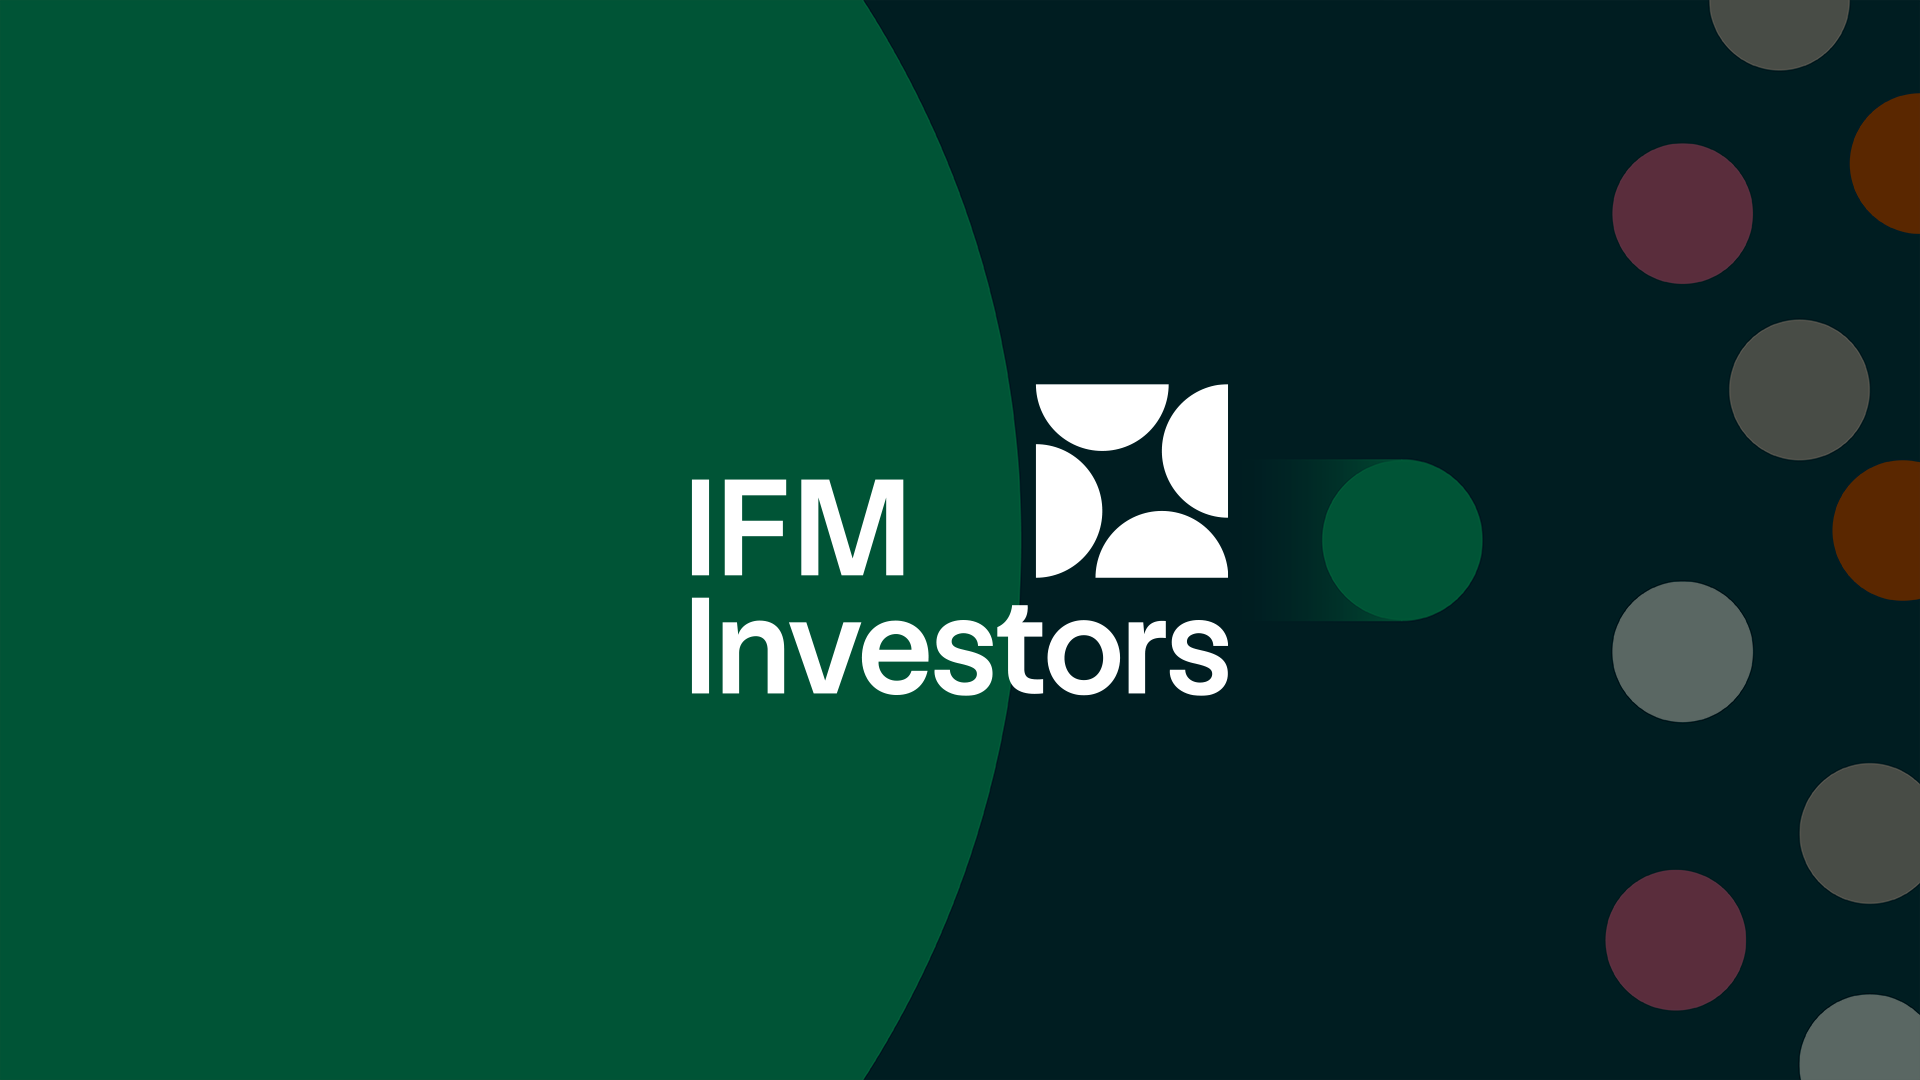 IFM INVESTORS | BRAND